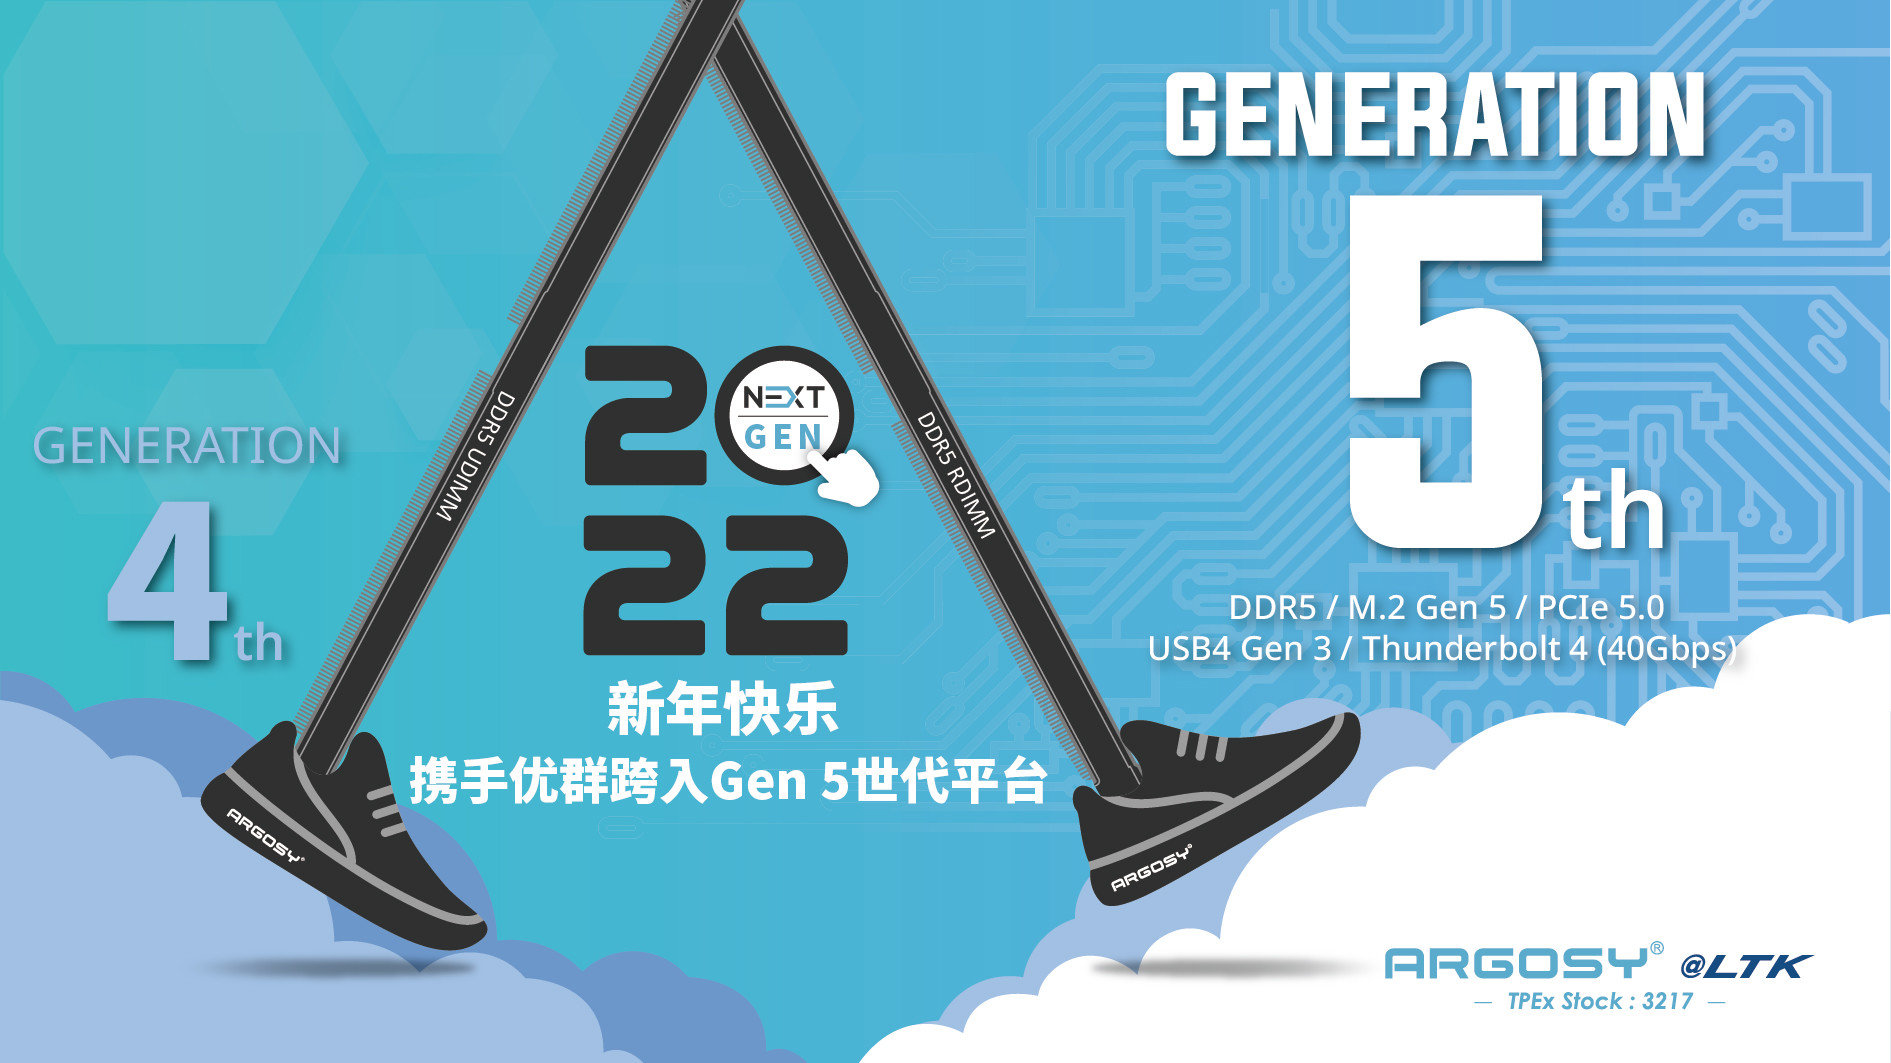 优群科技- 迎接 2022年 Gen 5世代平台-DDR5, M.2 Gen 5, PCIe 5.0, USB4, Thunderbolt 4